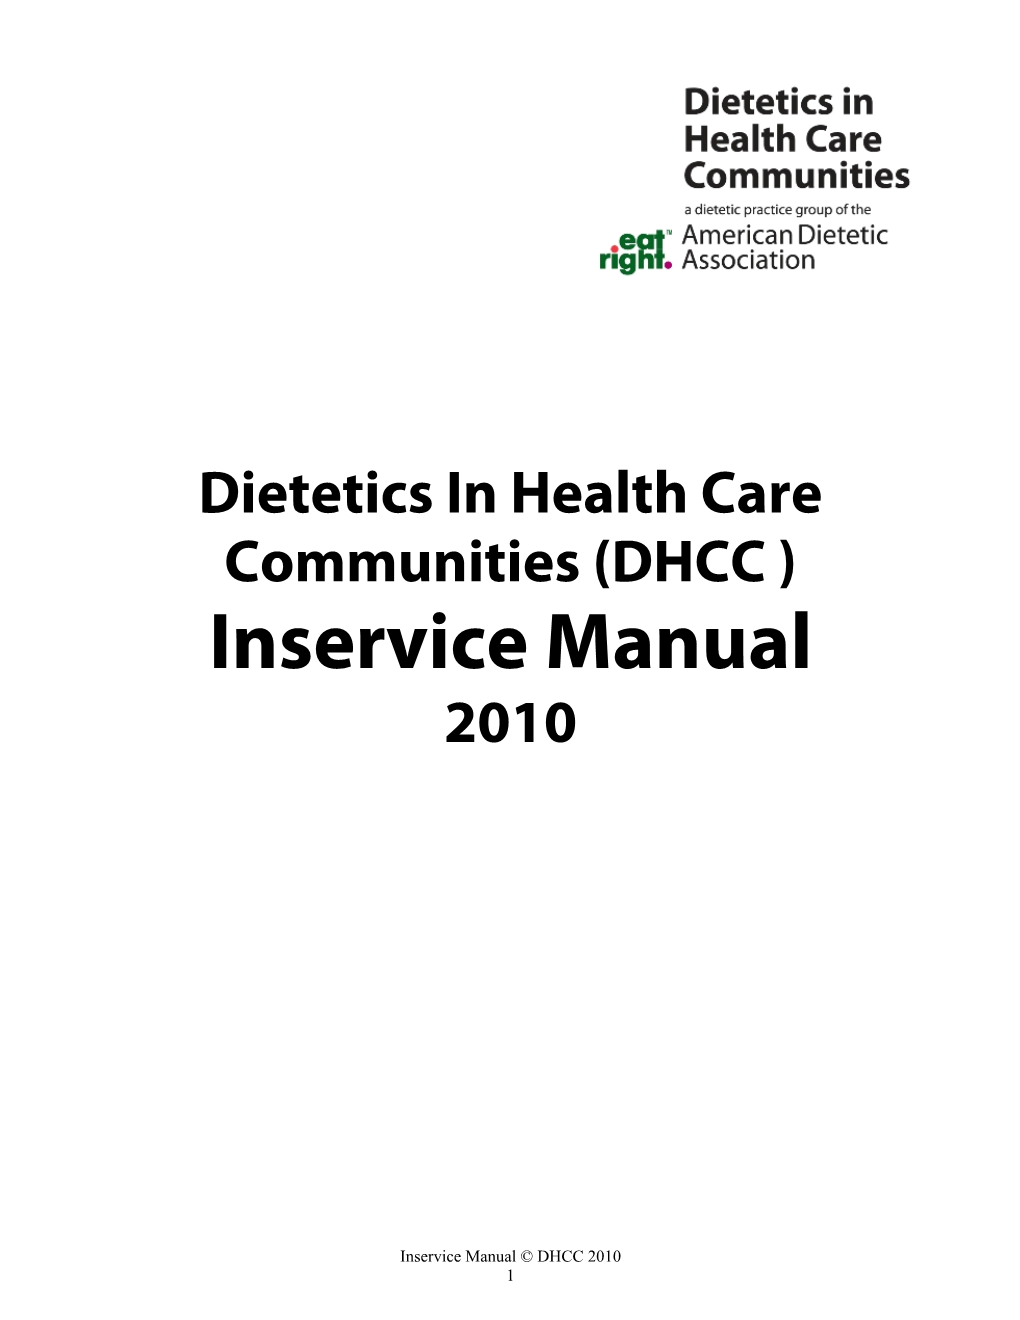 Inservice Manual 2010